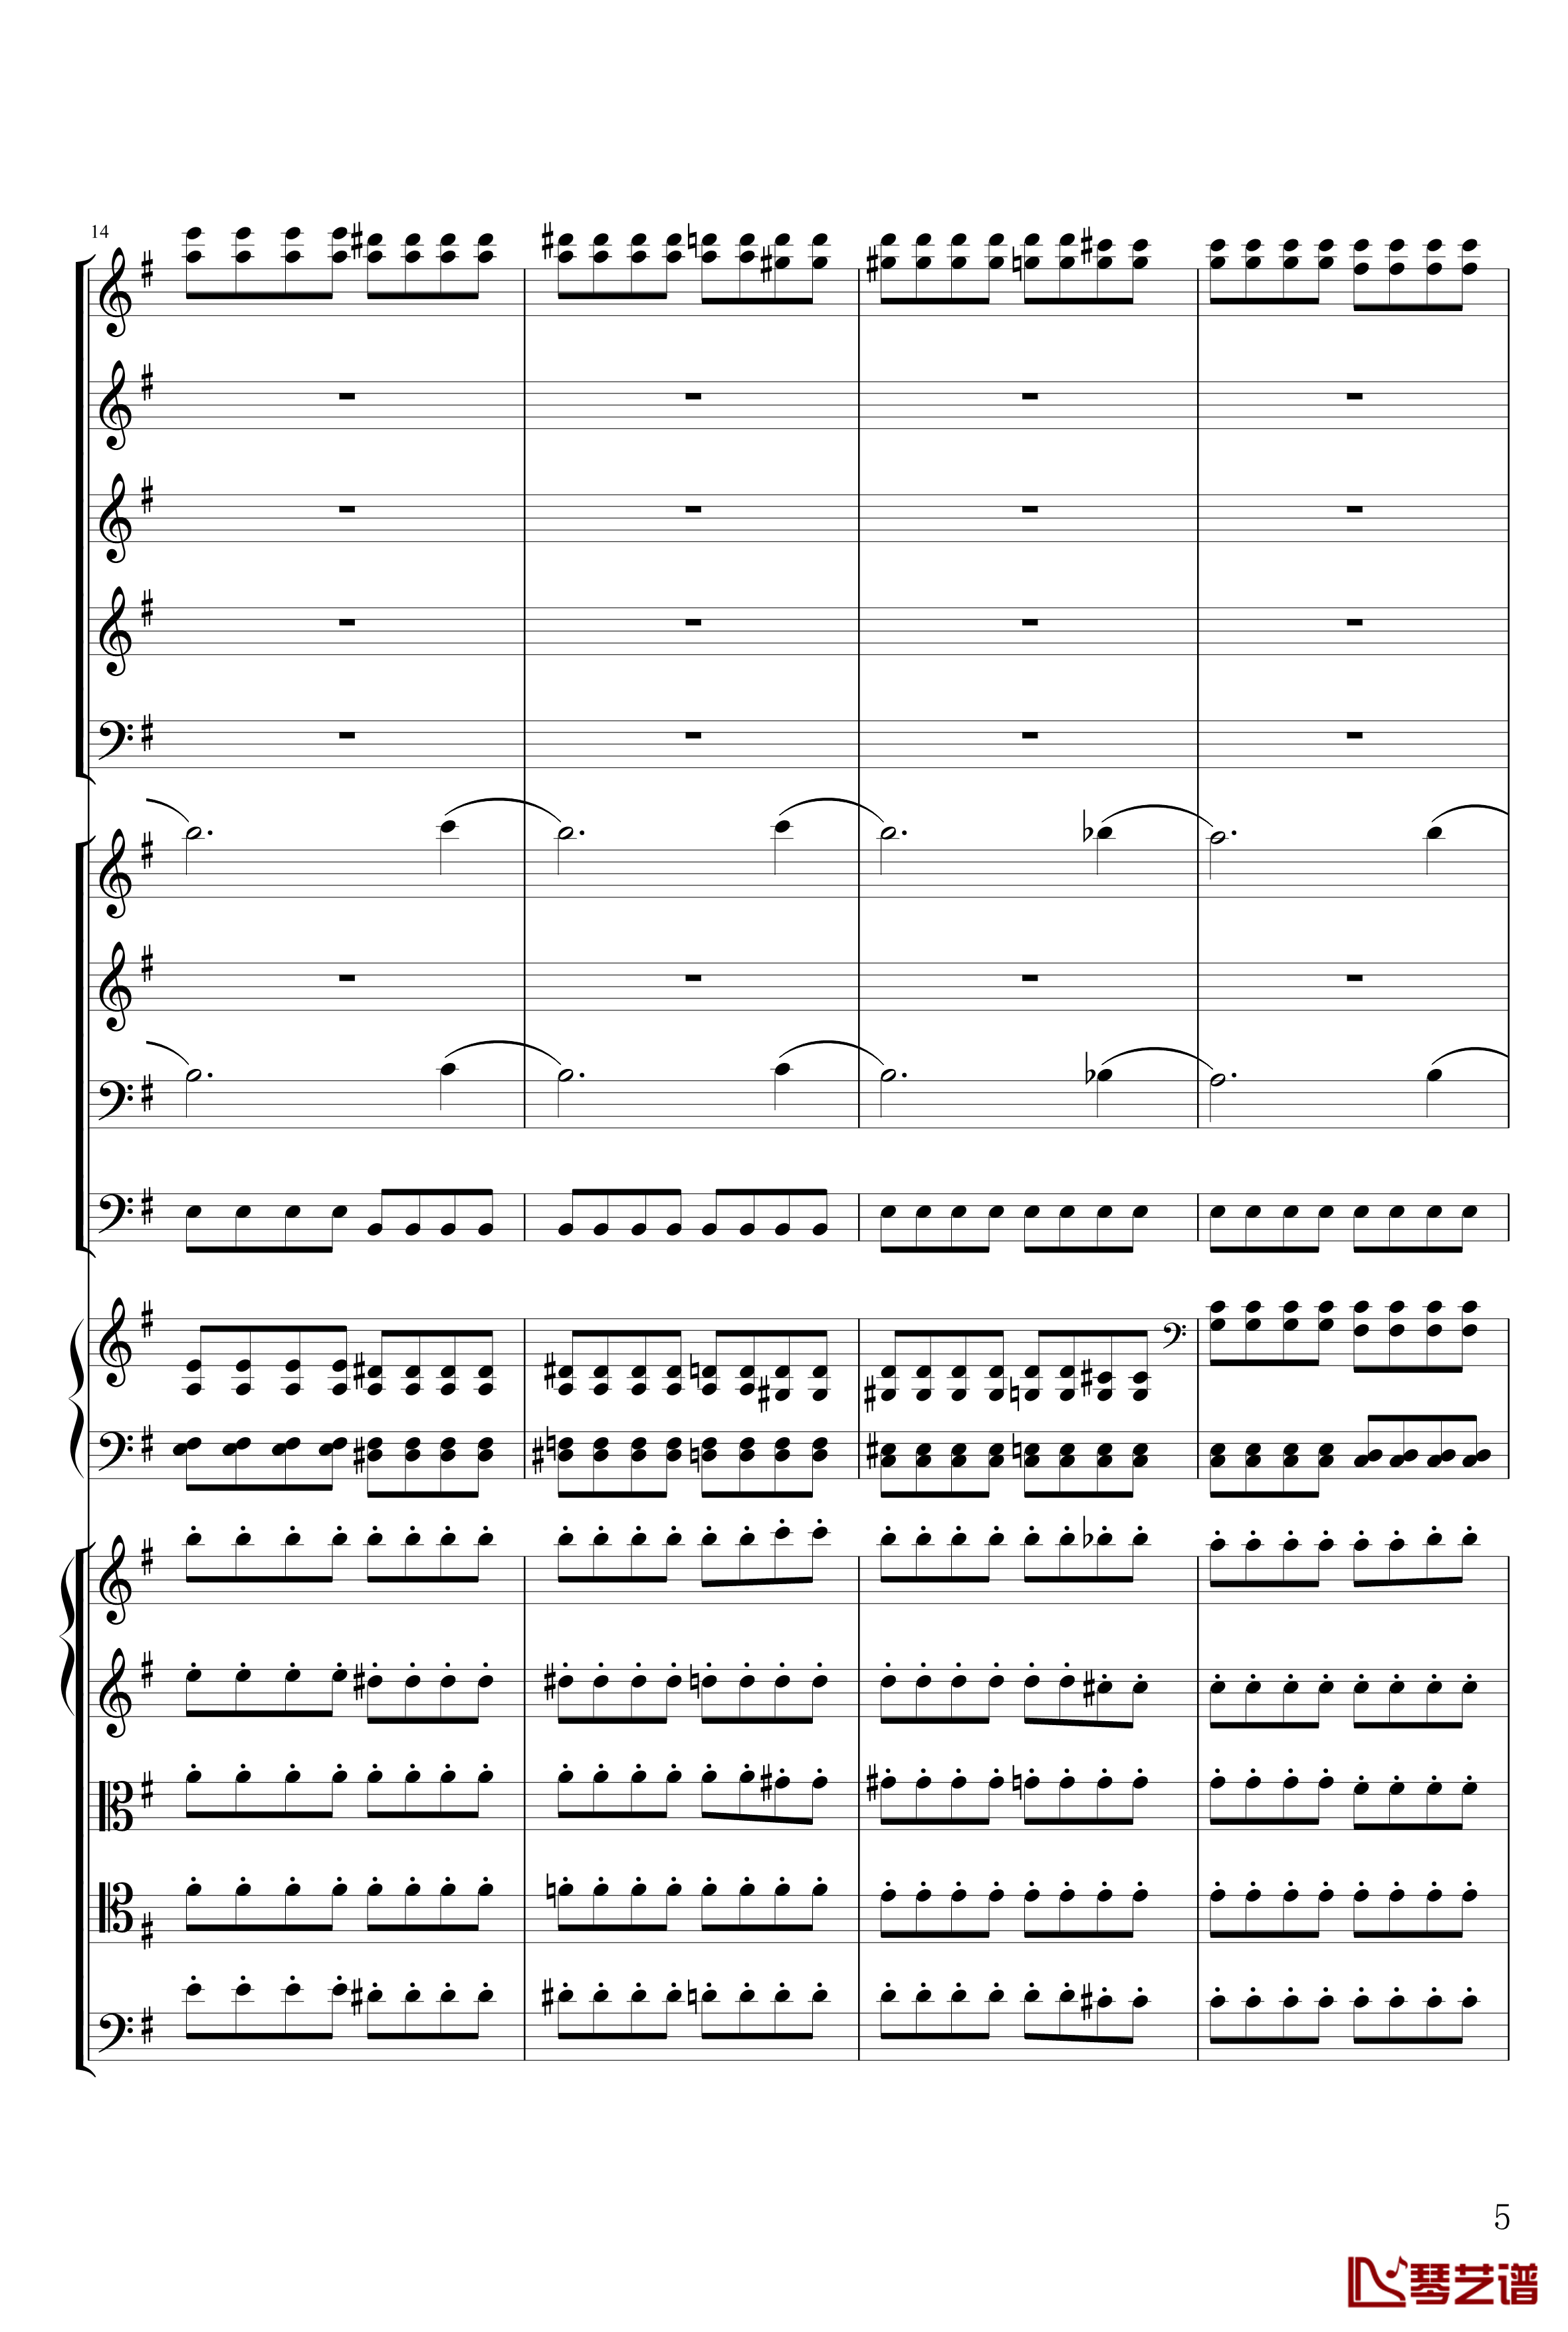 E小调前奏曲钢琴谱-交响乐版-肖邦-chopin5